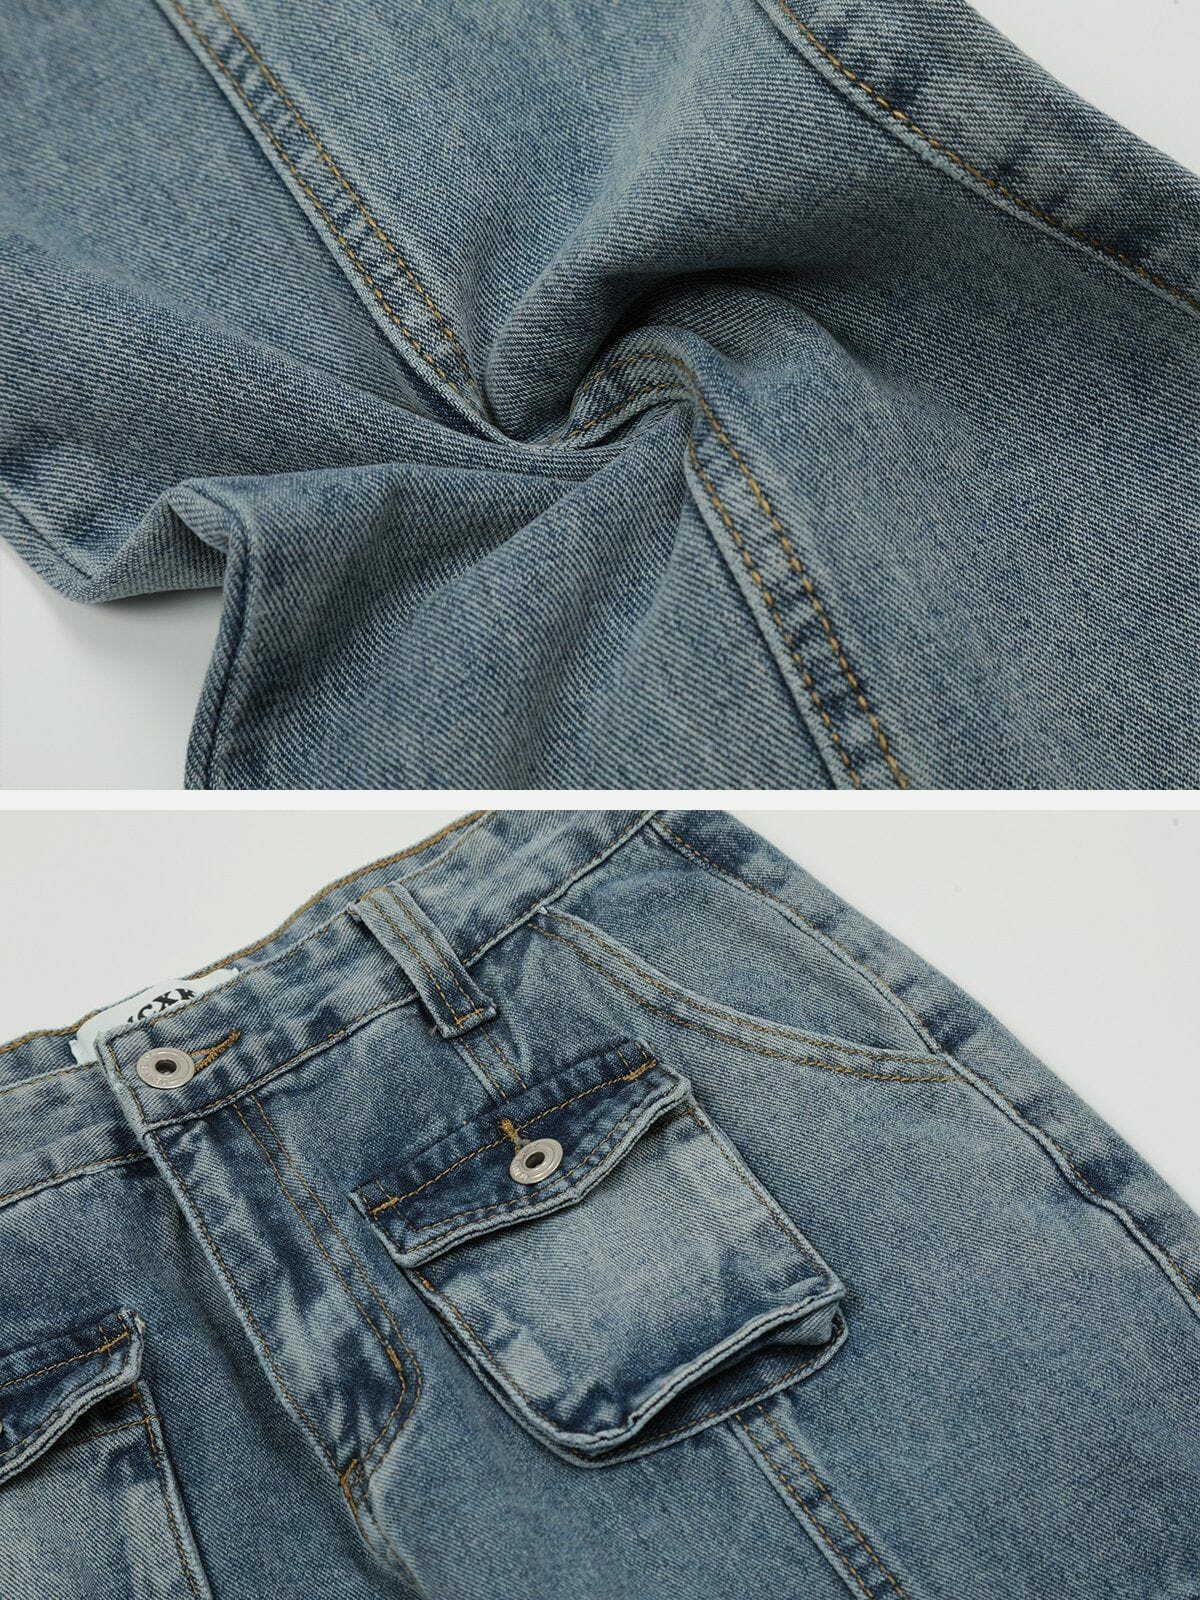 multipocket vintage jeans edgy & retro streetwear 7751